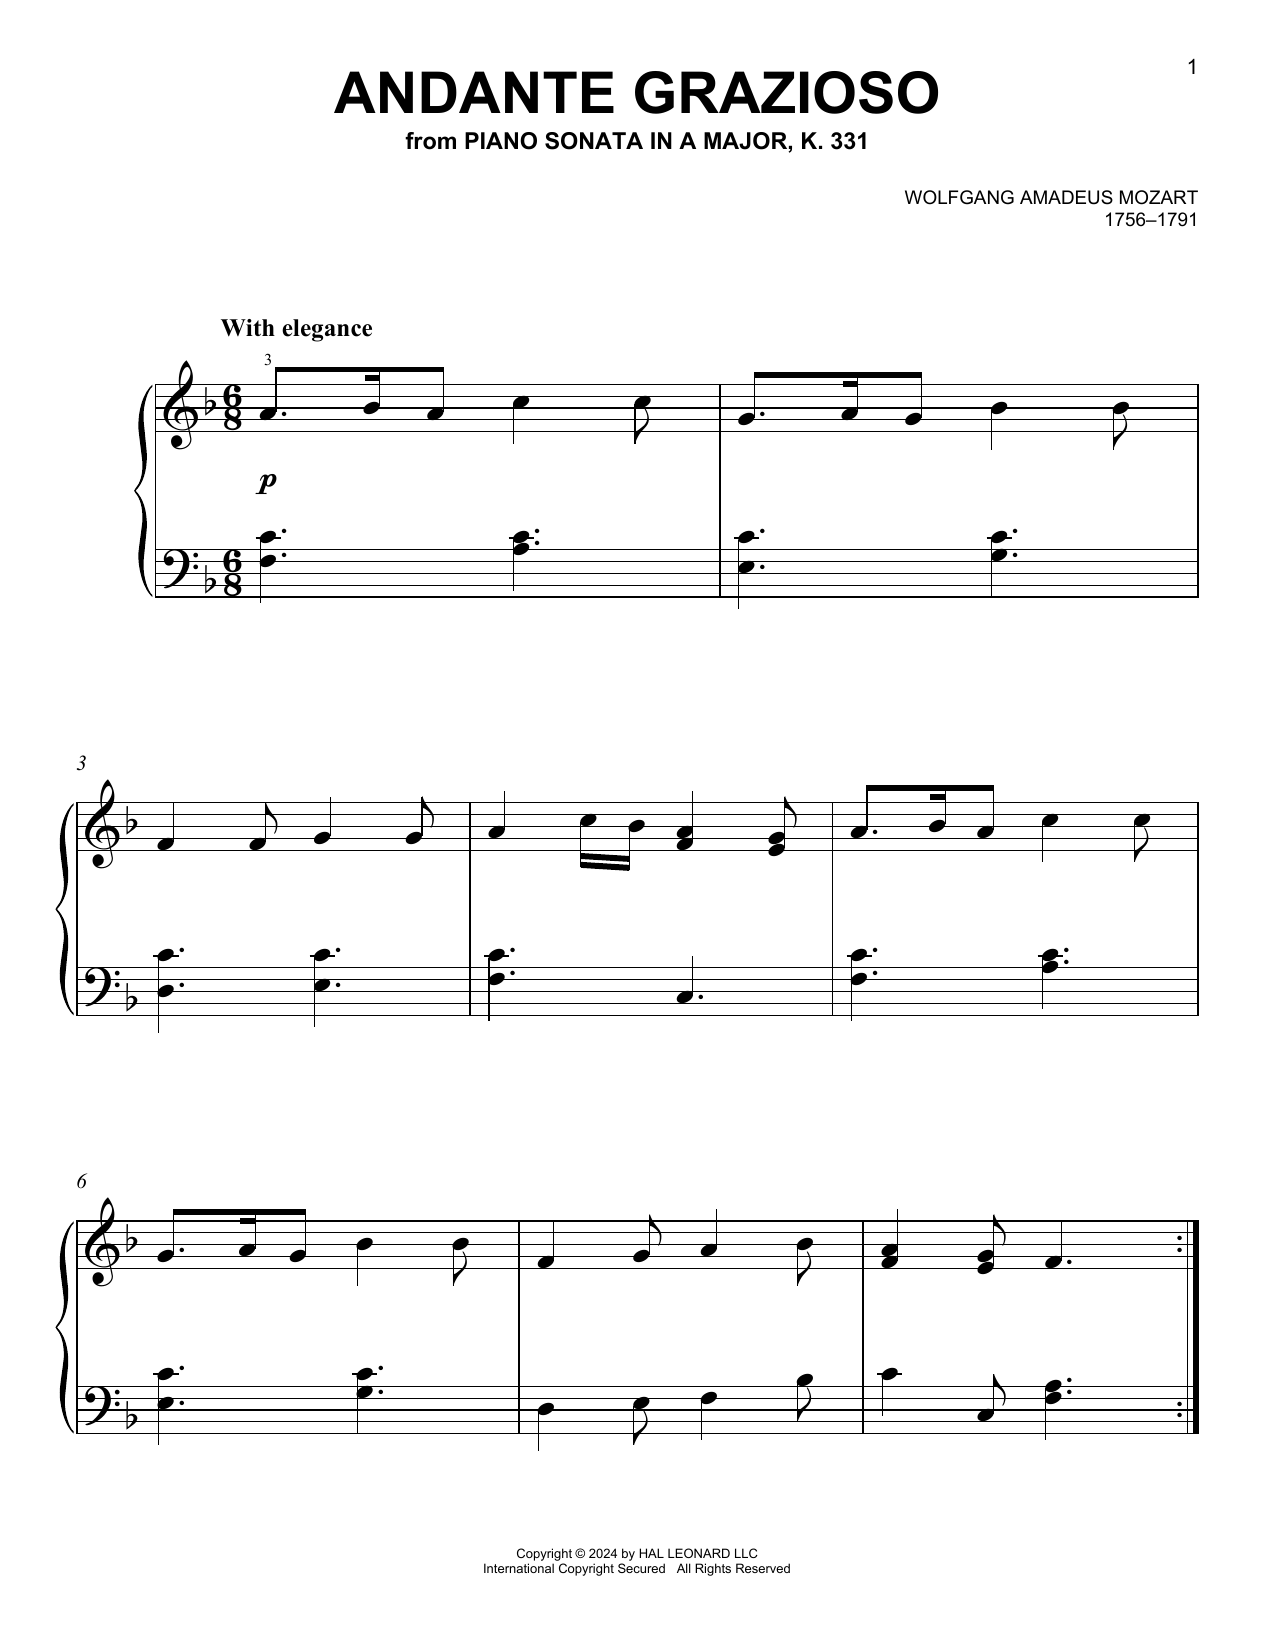 Wolfgang Amadeus Mozart Andante Grazioso, K. 331 (Theme) sheet music notes printable PDF score